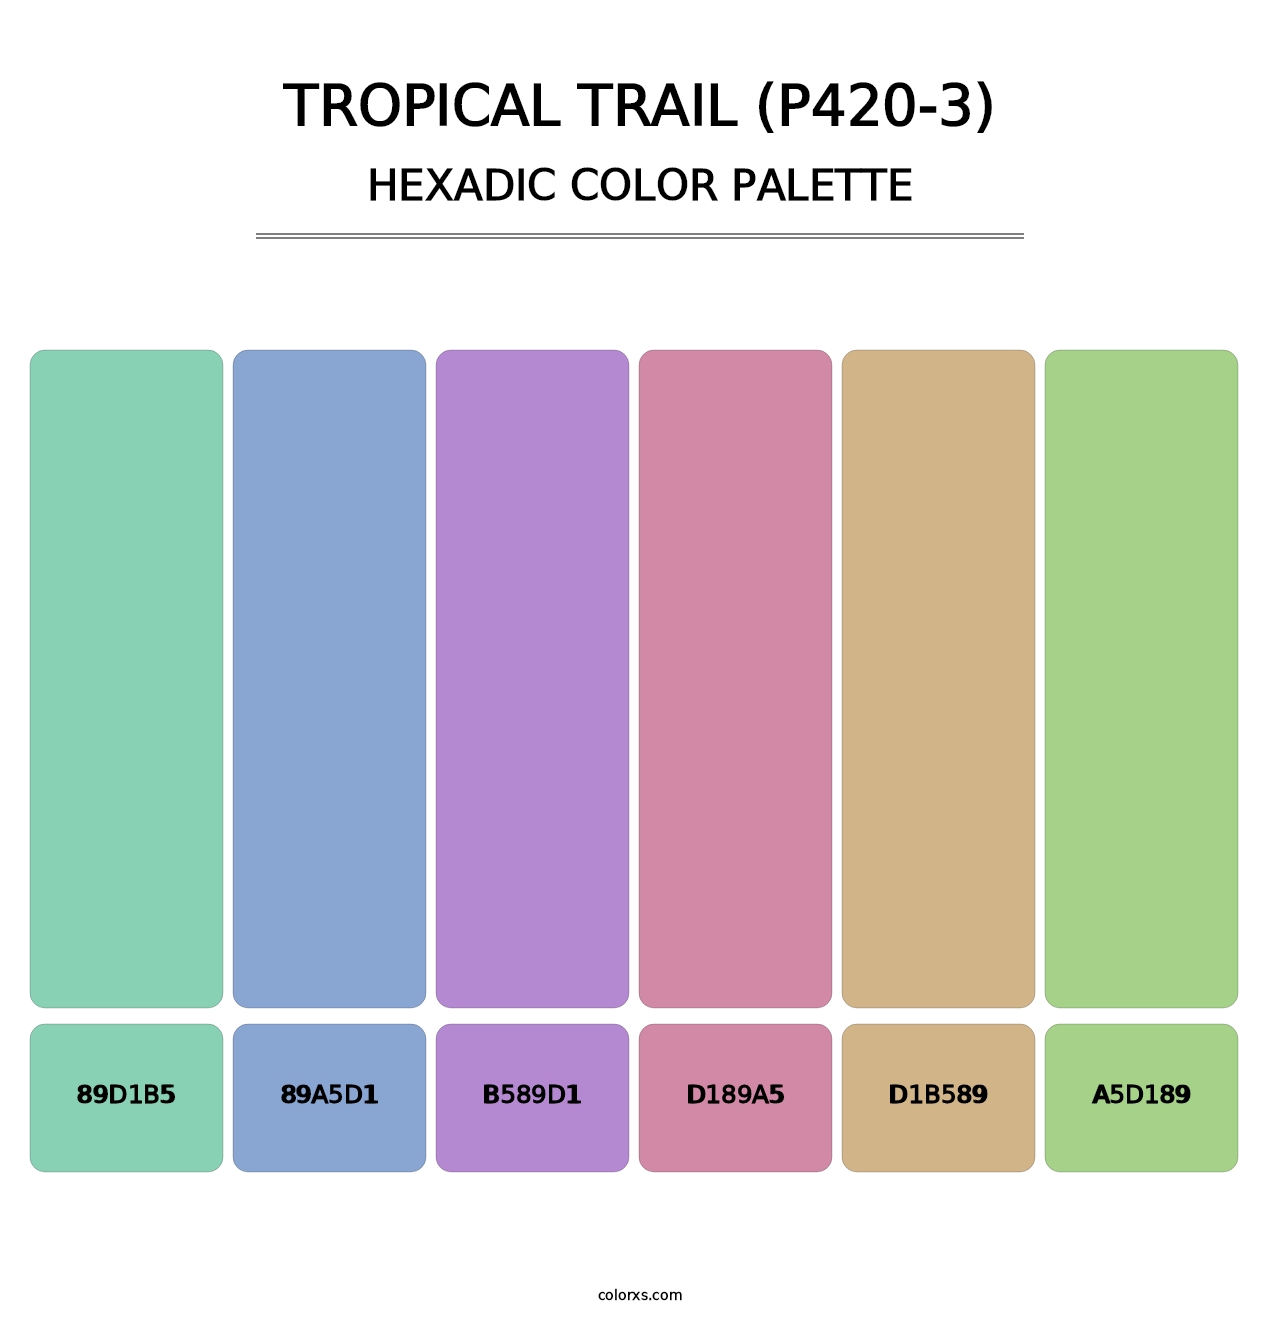 Tropical Trail (P420-3) - Hexadic Color Palette